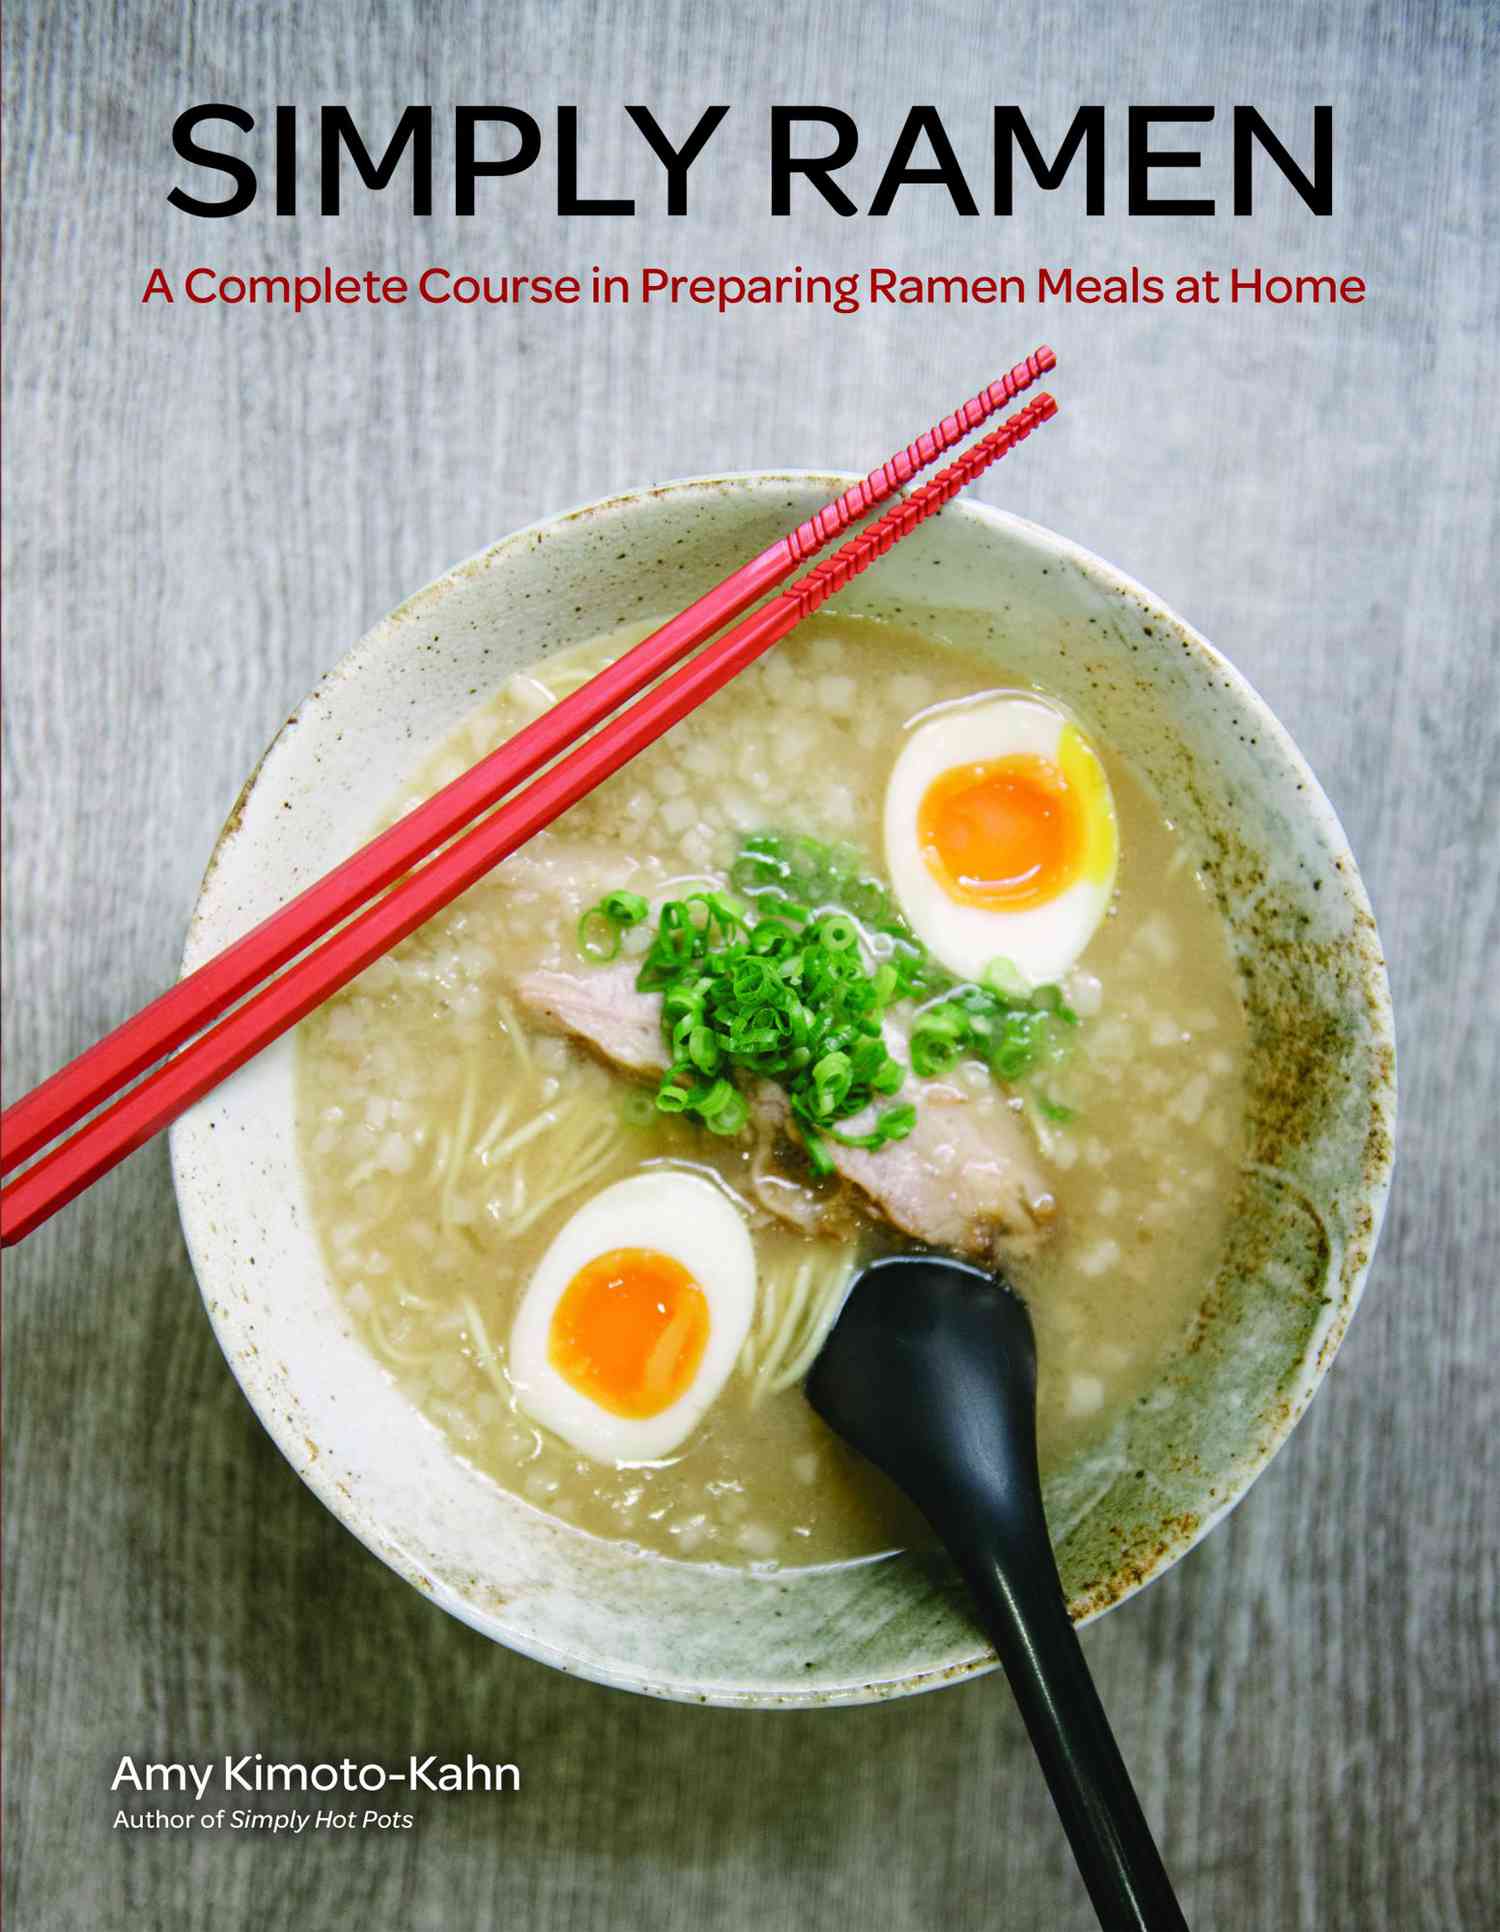 Simply Ramen Cookbook by Amy Kimoto-Kahn